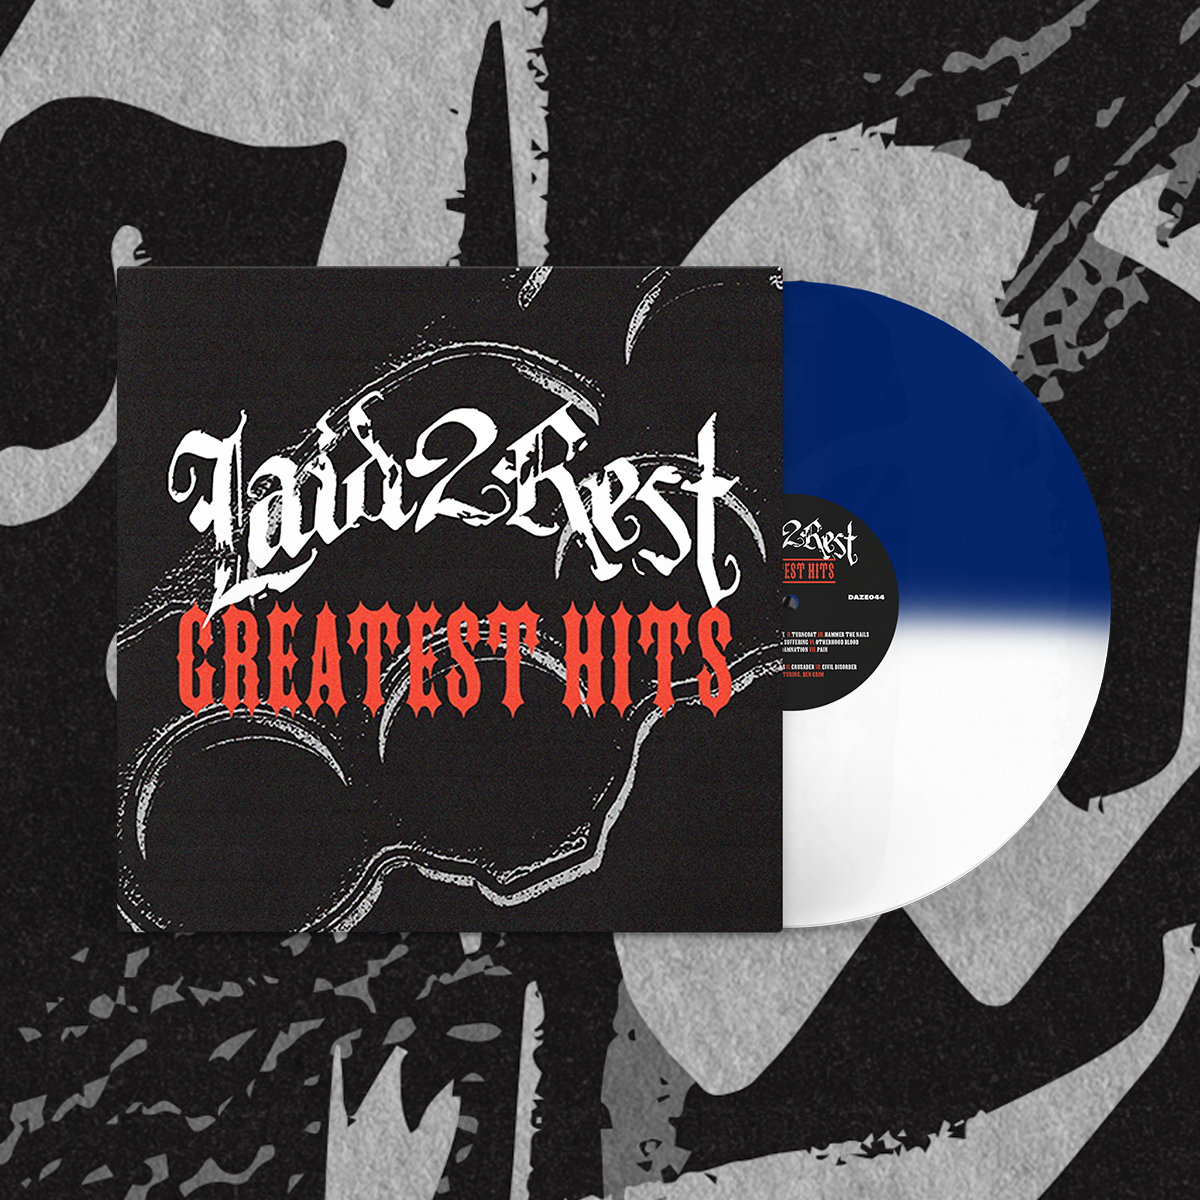 LAID 2 REST "GREATEST HITS" LP - Half White/Half Blue